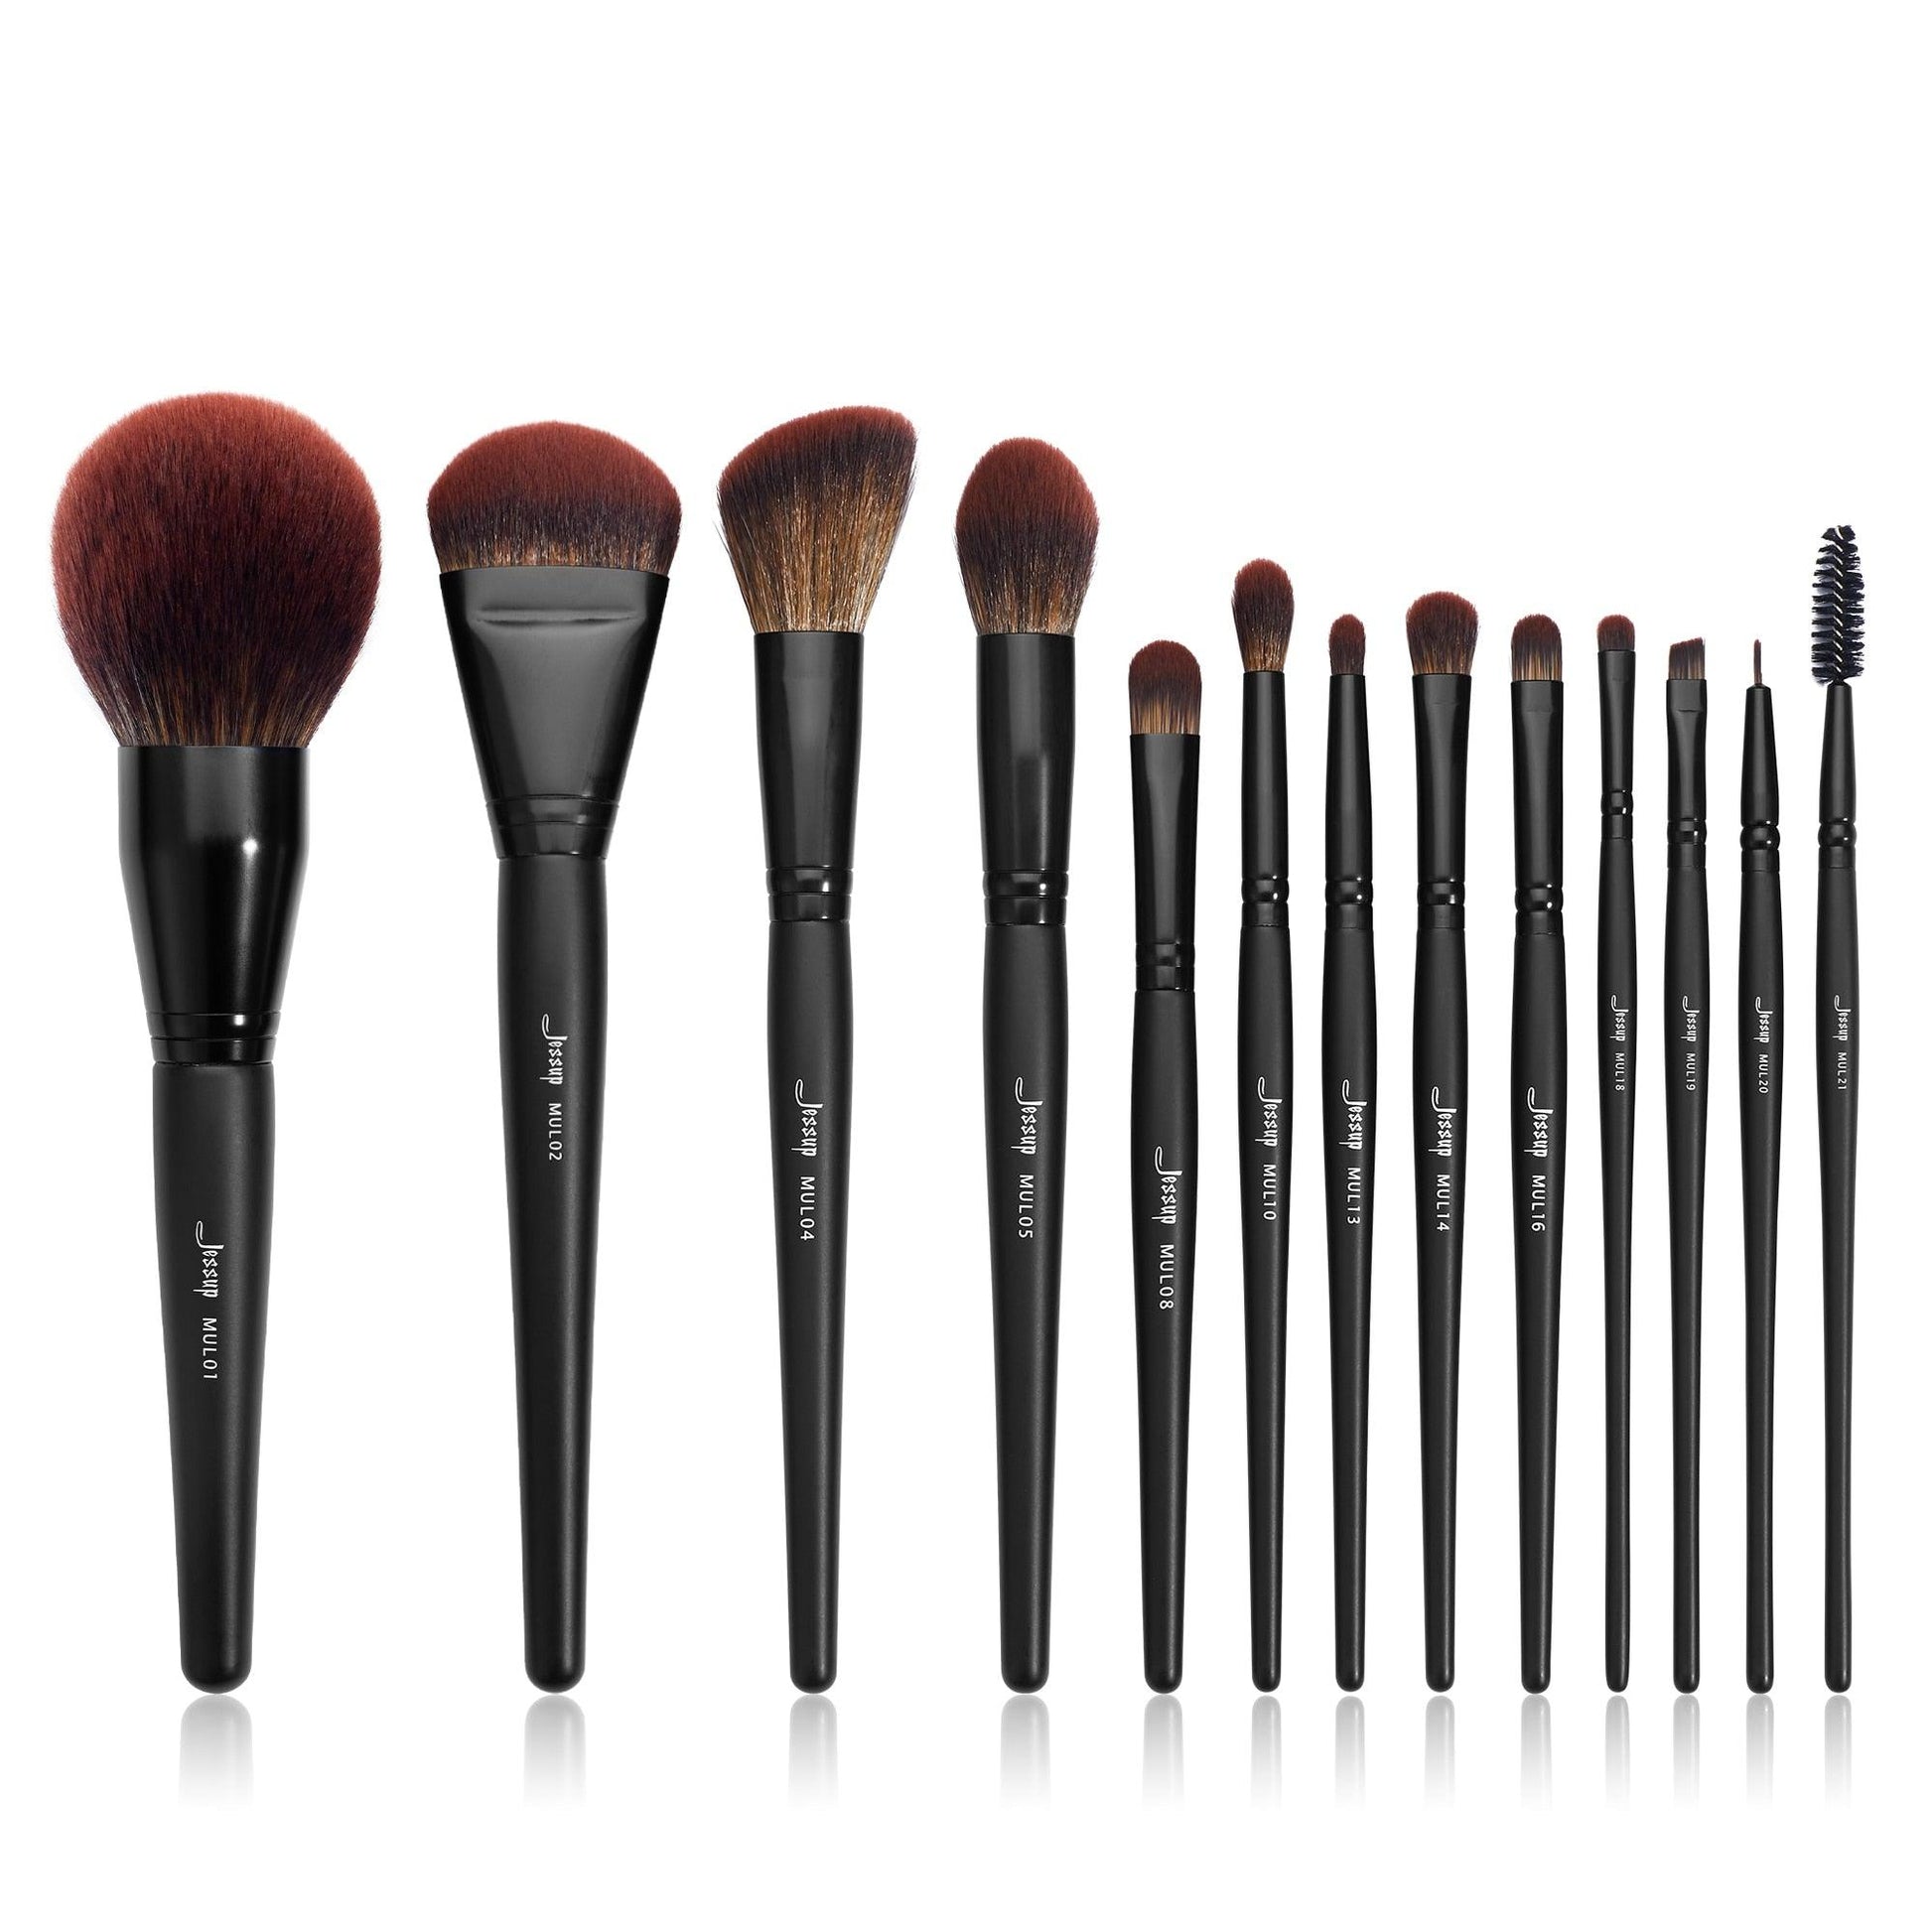 Jessup Makeup Brushes 10-14pcs Makeup Brush set, Synthetic Foundation Powder Contour Eyeshadow Liner Blending Highlight - Belleroz